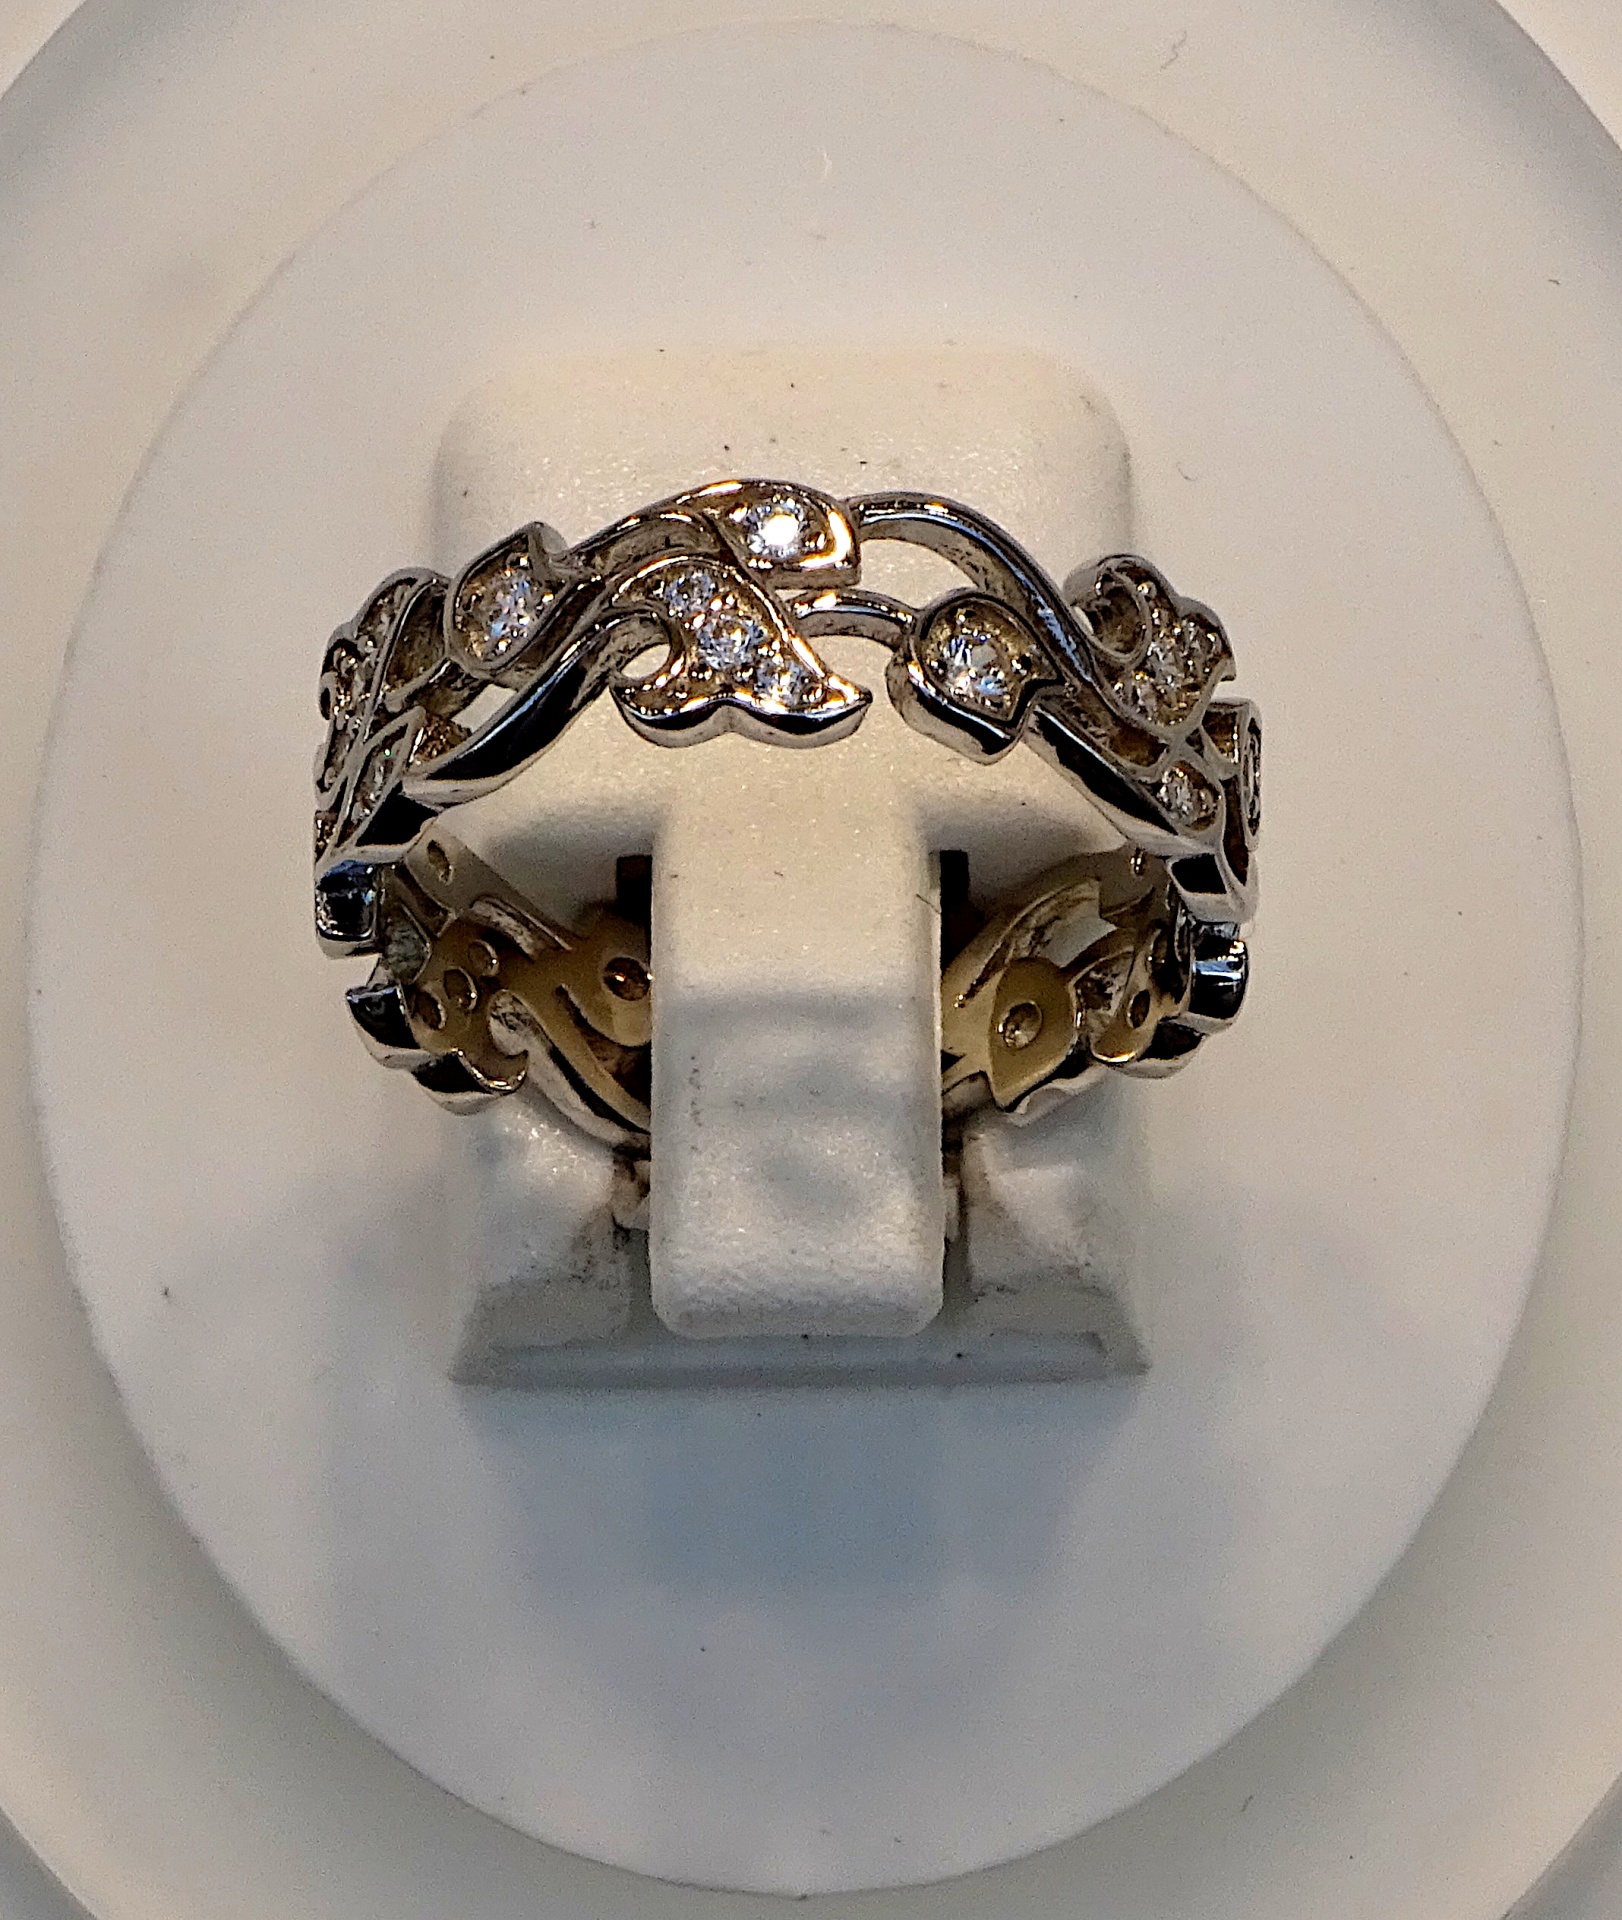 Ladies Silver Ring